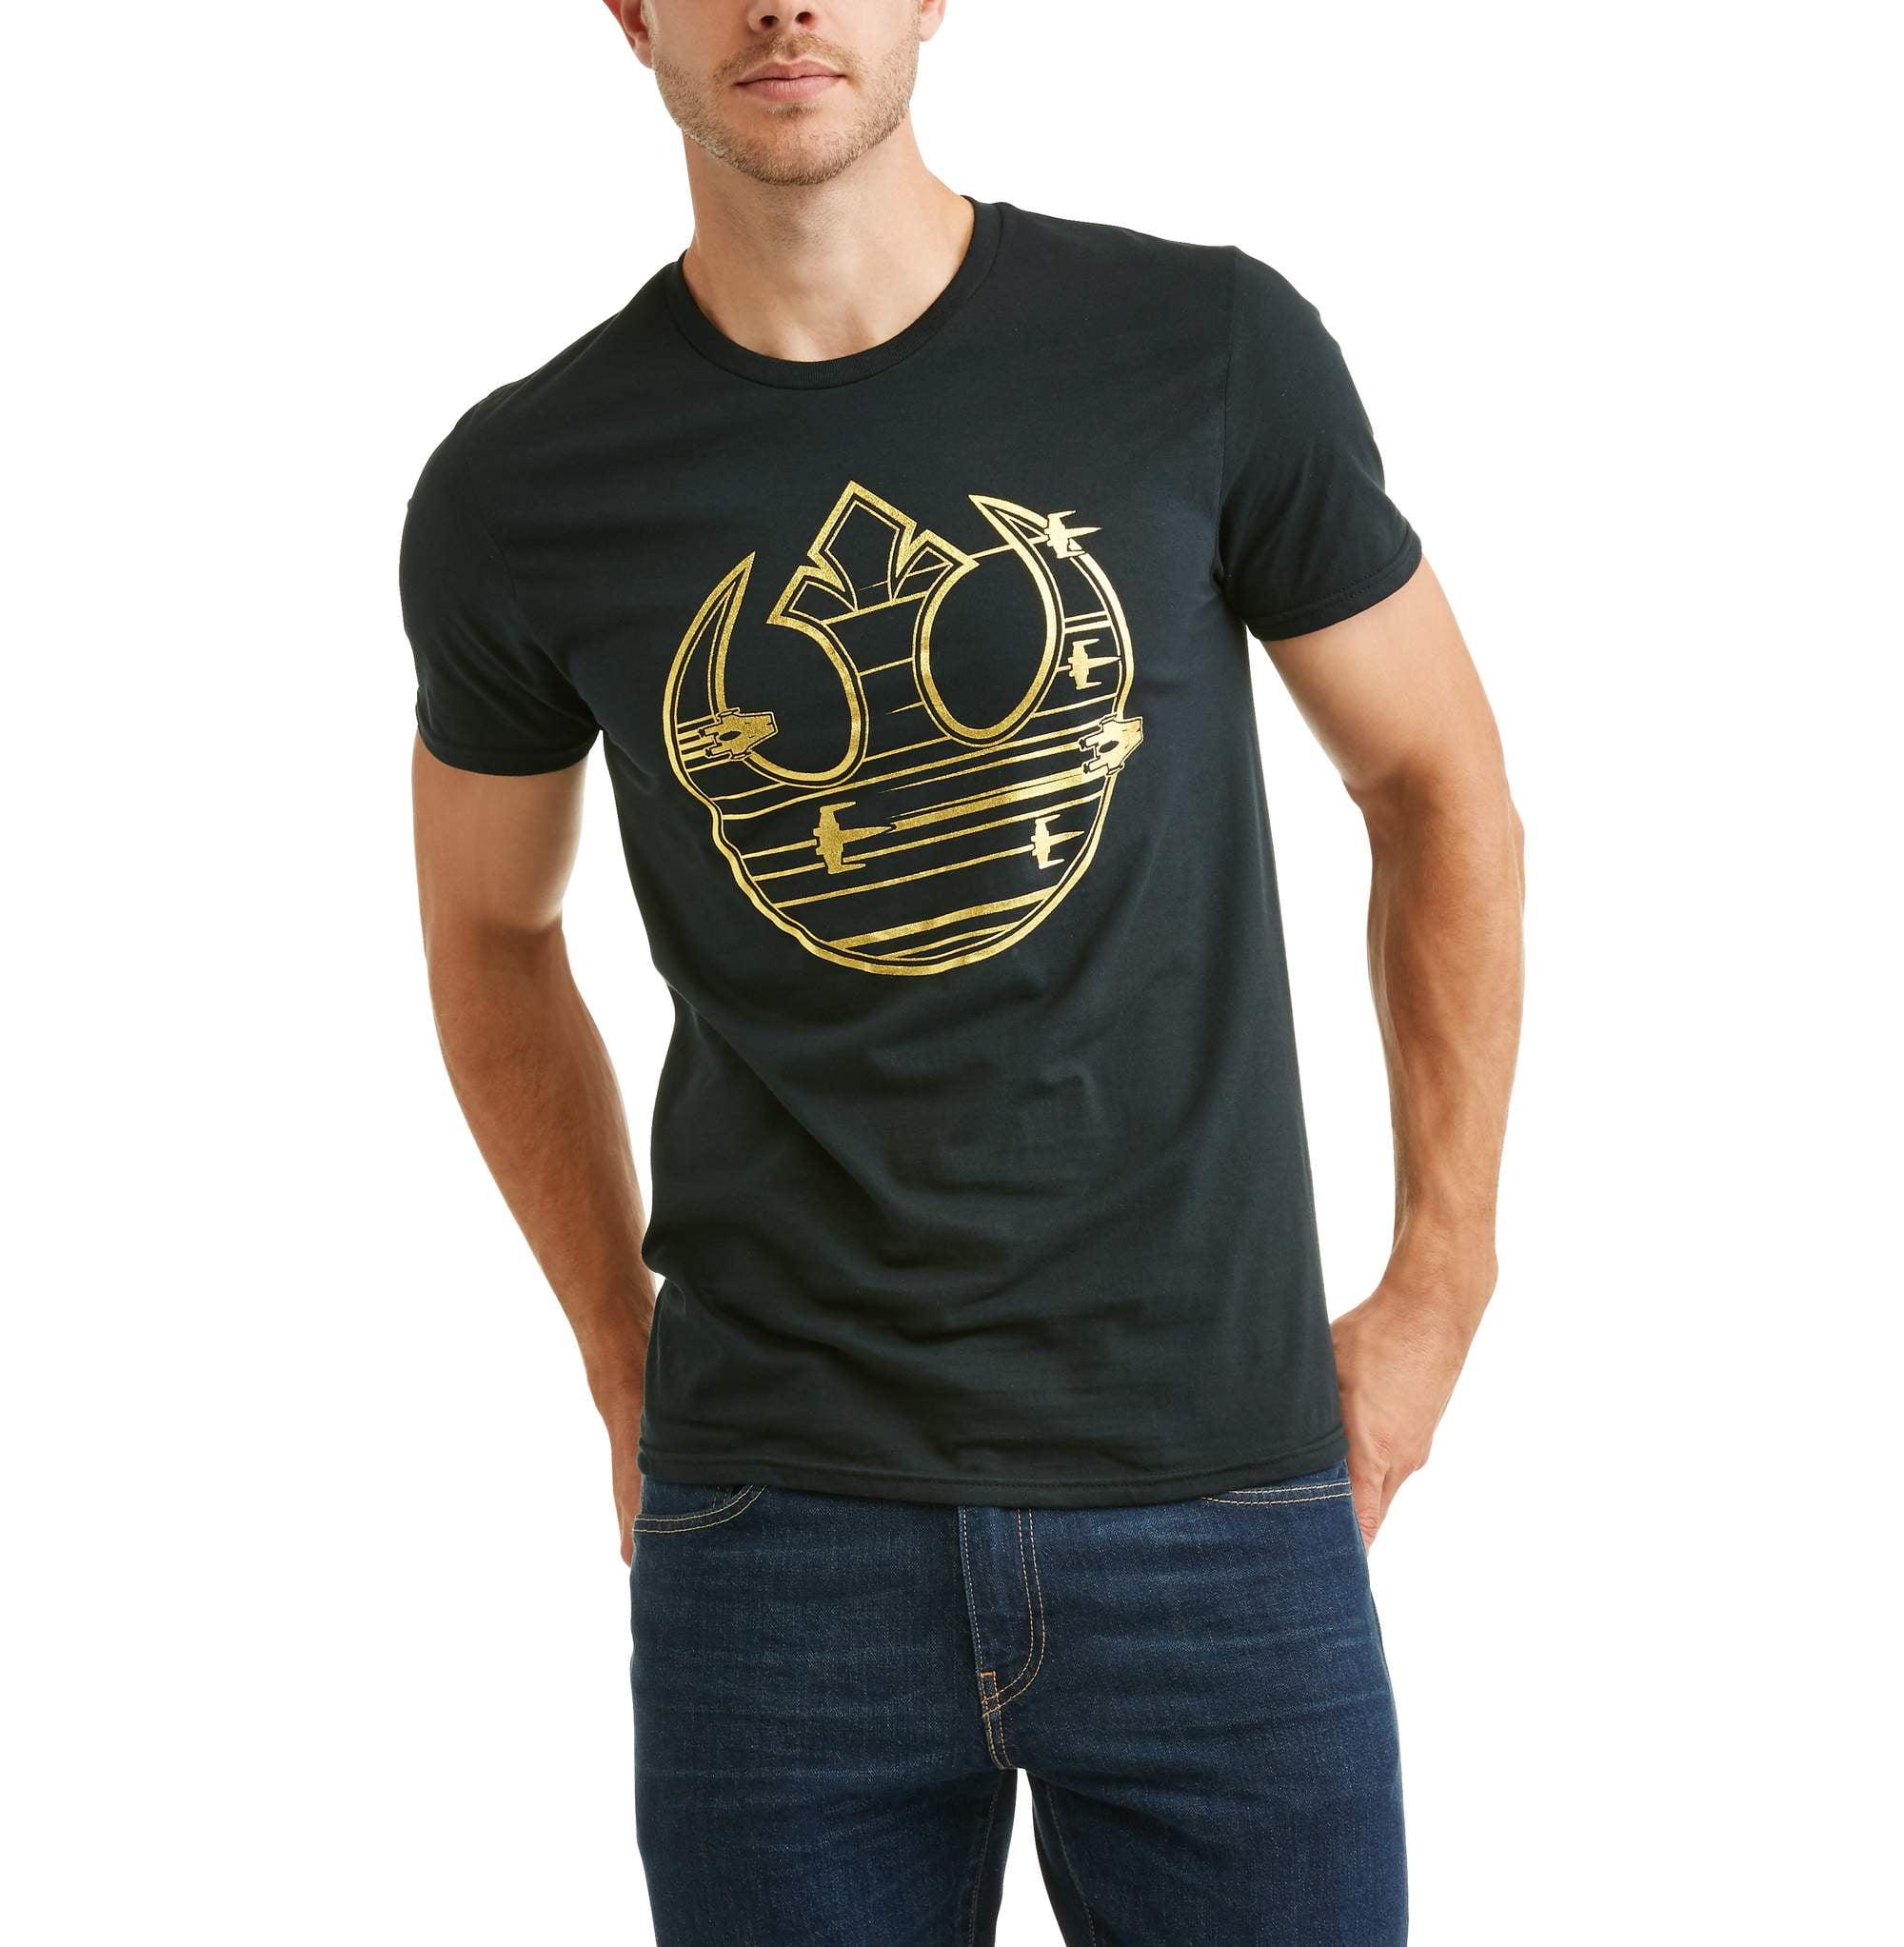 Black Star Wars Jeep Graphic T-Shirt. Distressed